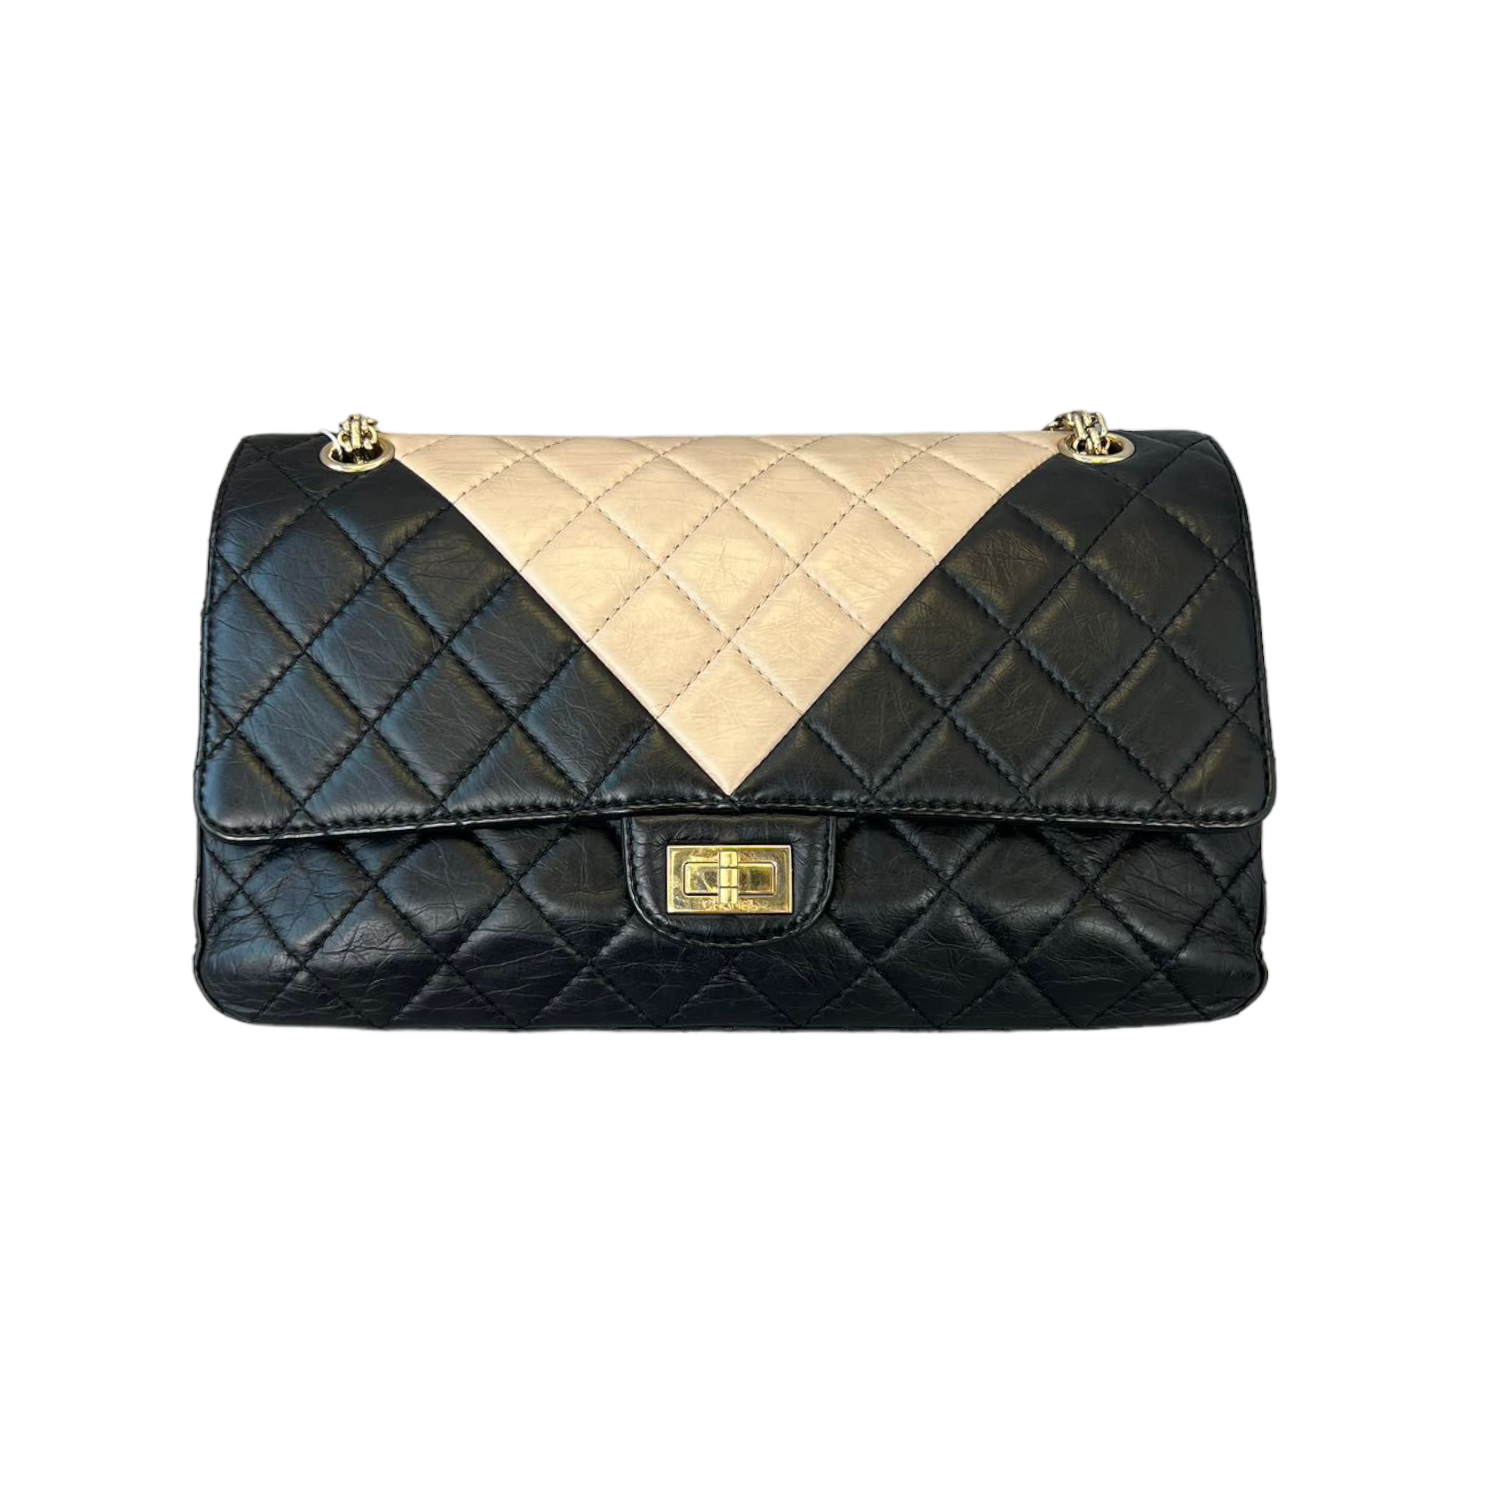 Chanel - 2.55 Reissue Flap Bag - 225 - Black Aged Lambskin GHW